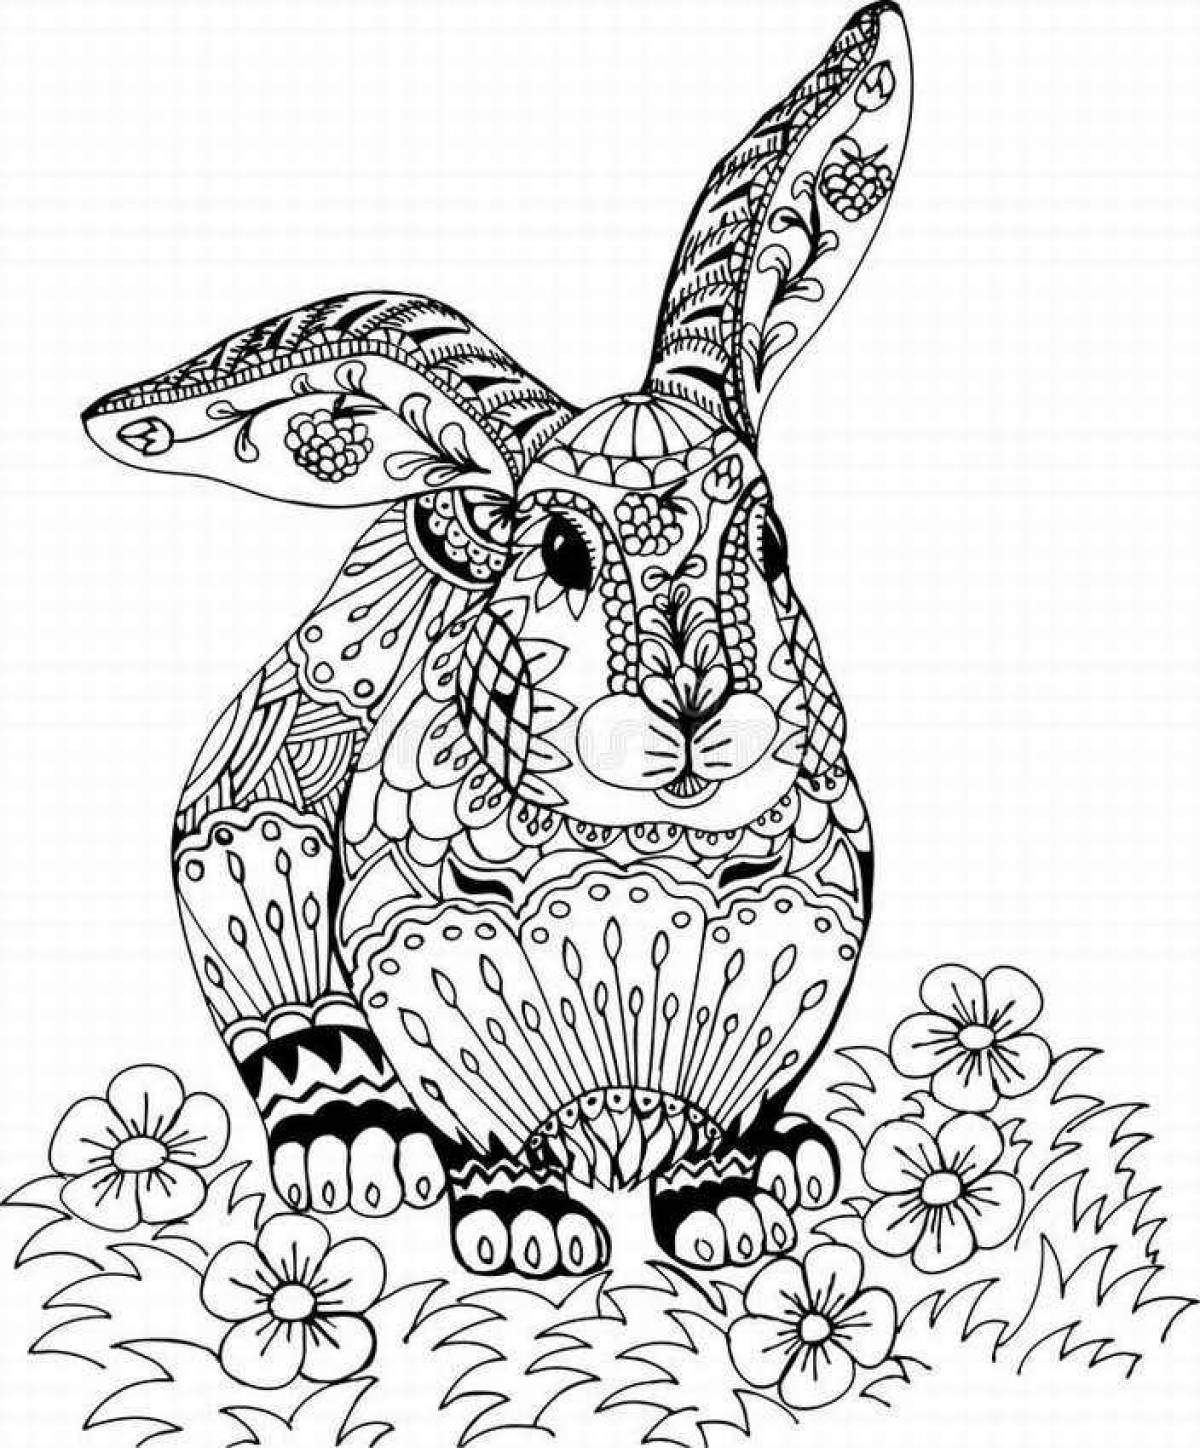 Delightful anti-stress coloring hare